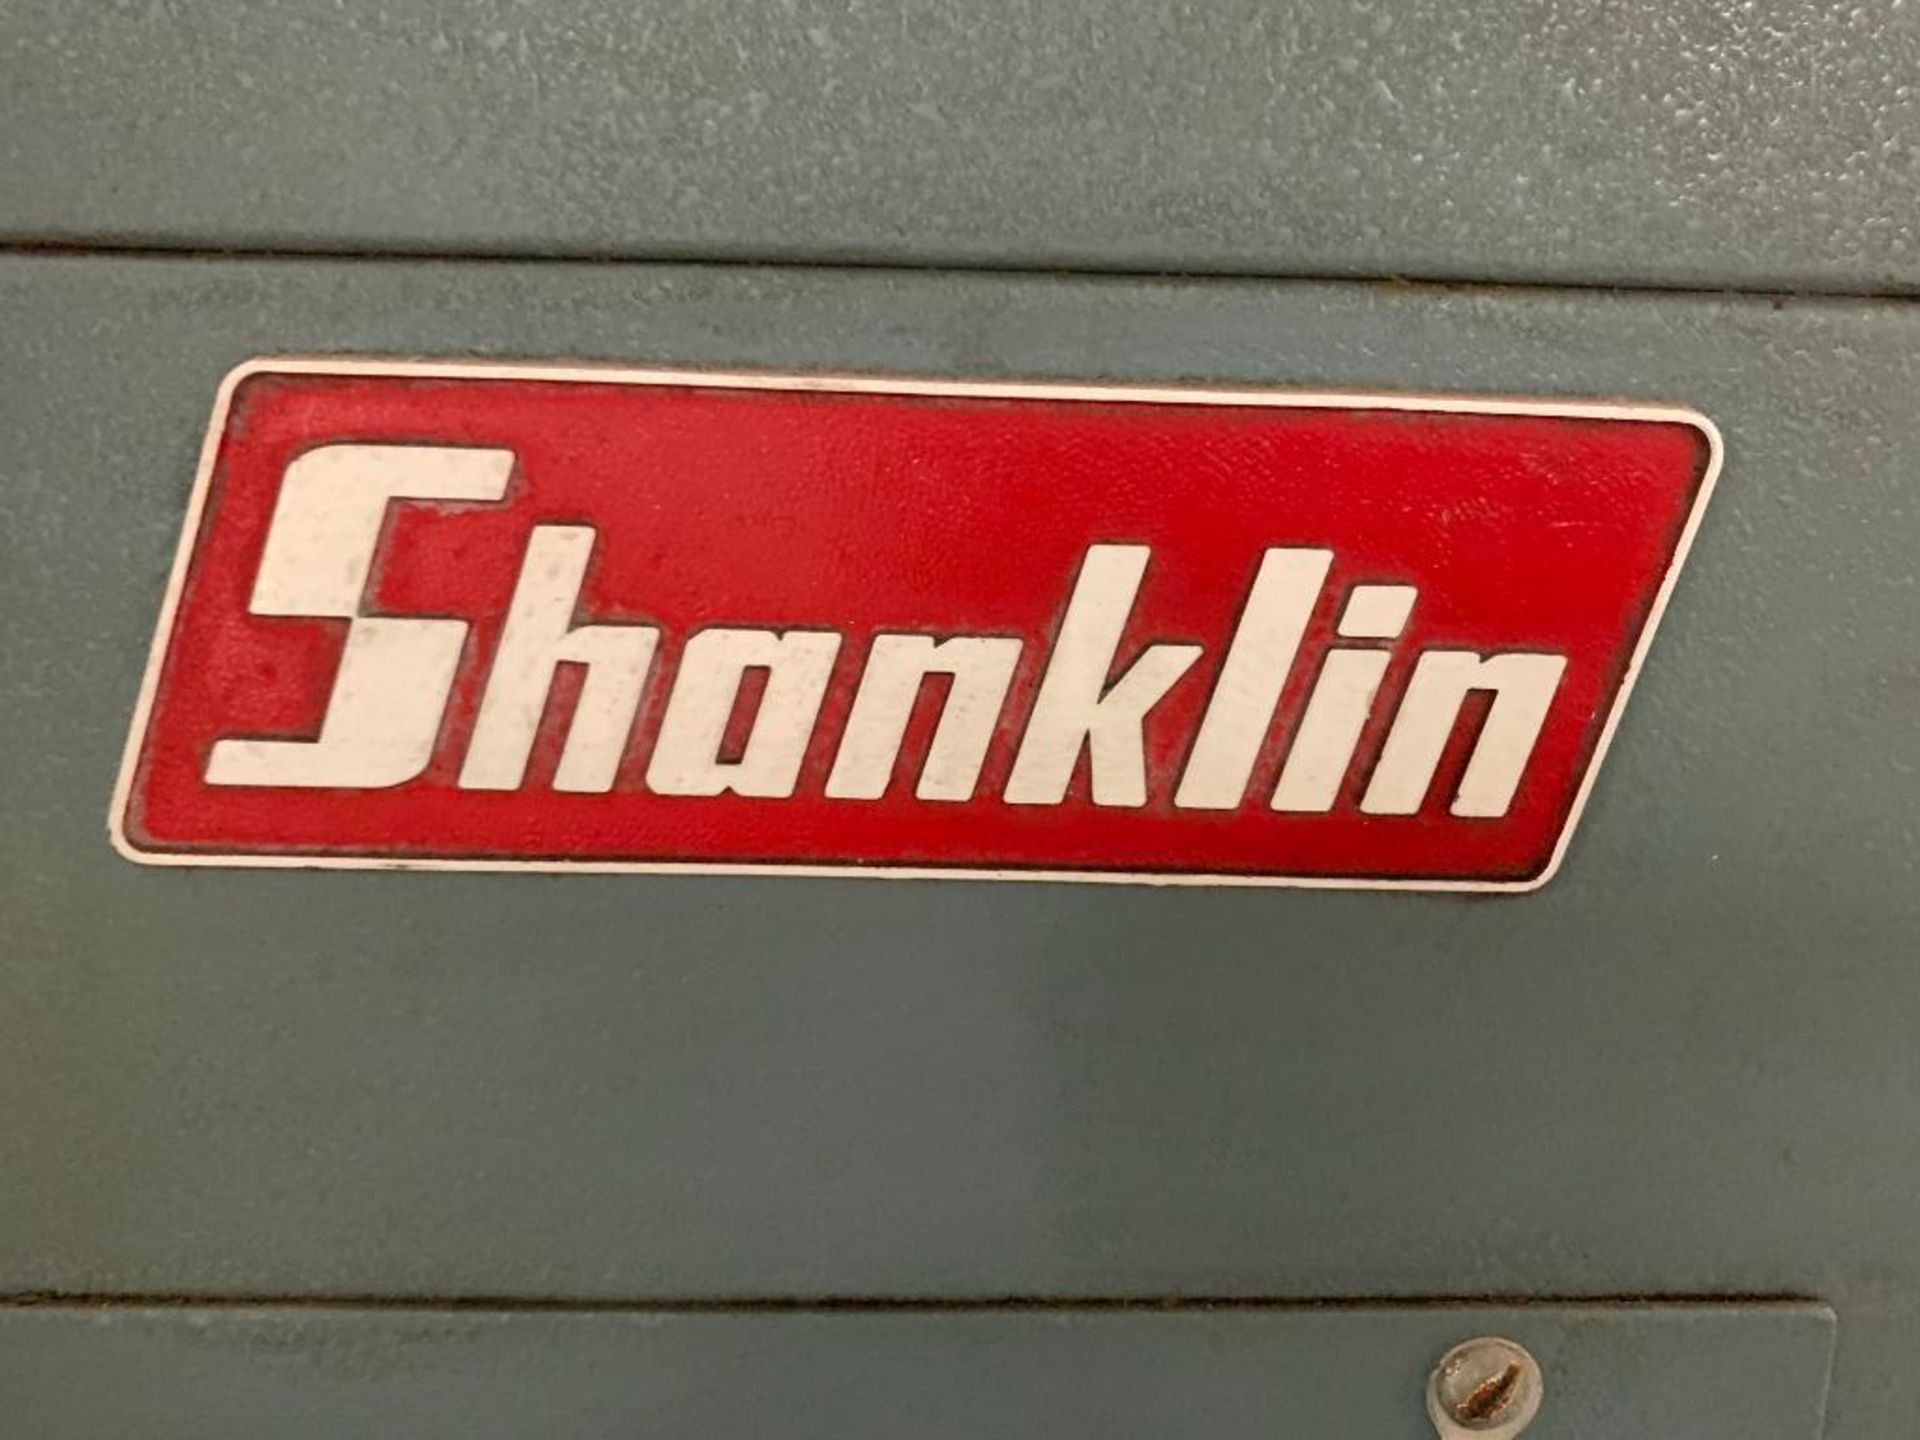 SHANKLIN PASS THROUGH HEAT SHRINK TUNNEL, MODEL T62, S/N T00299, 230 V, 3-PH - Image 6 of 6